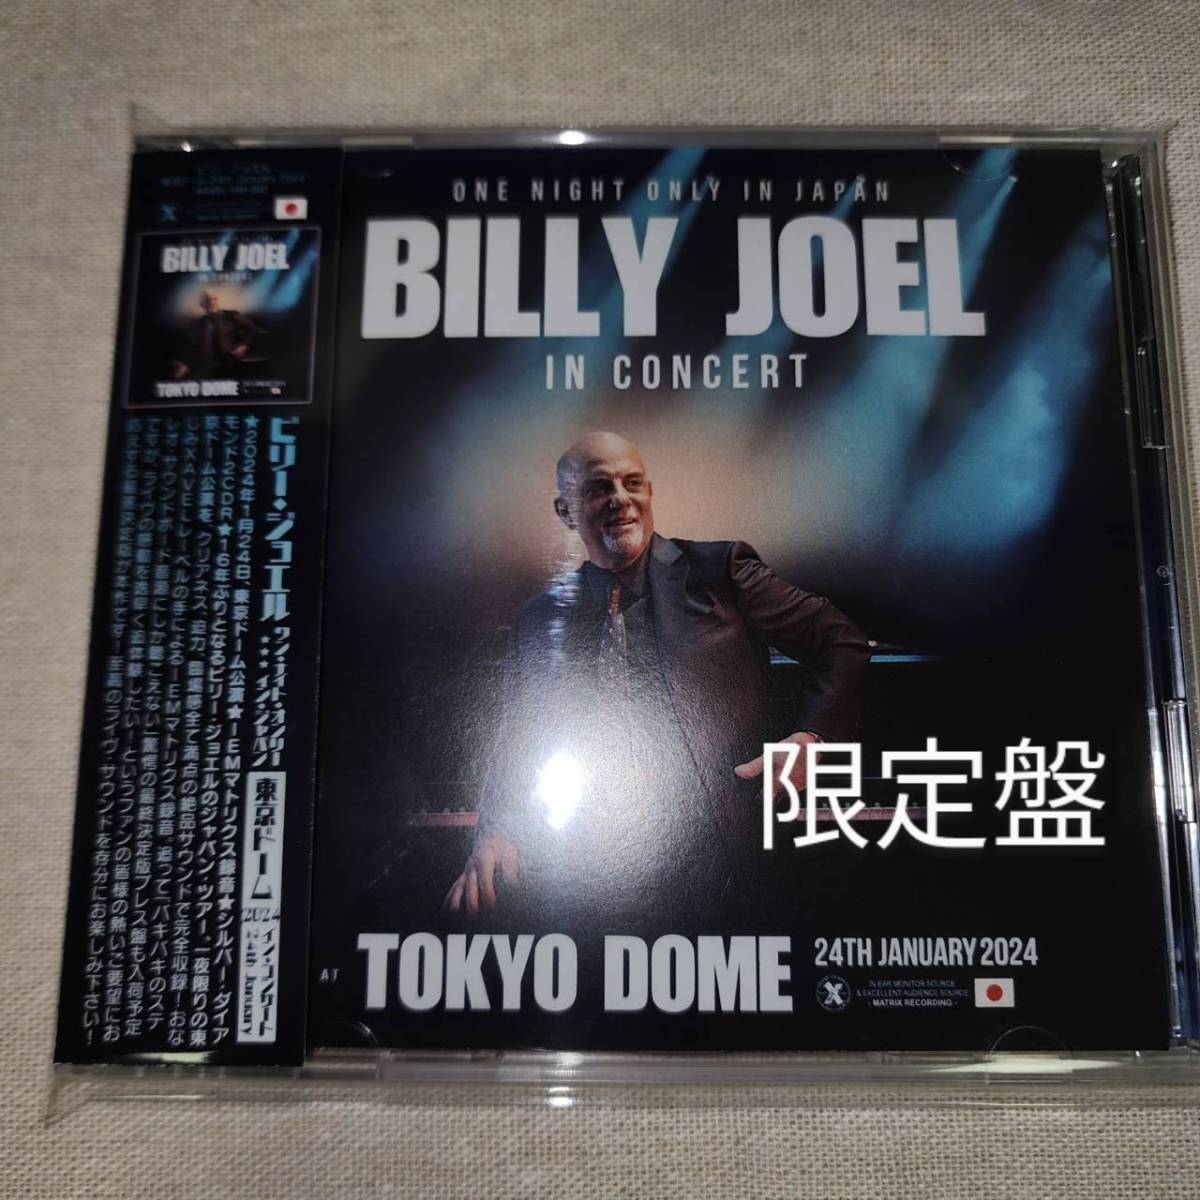 Billy Joel (2CD＋ボーナス) At Tokyo Dome 24th January 2024 限定盤 ◎XAVELレーベル_画像1